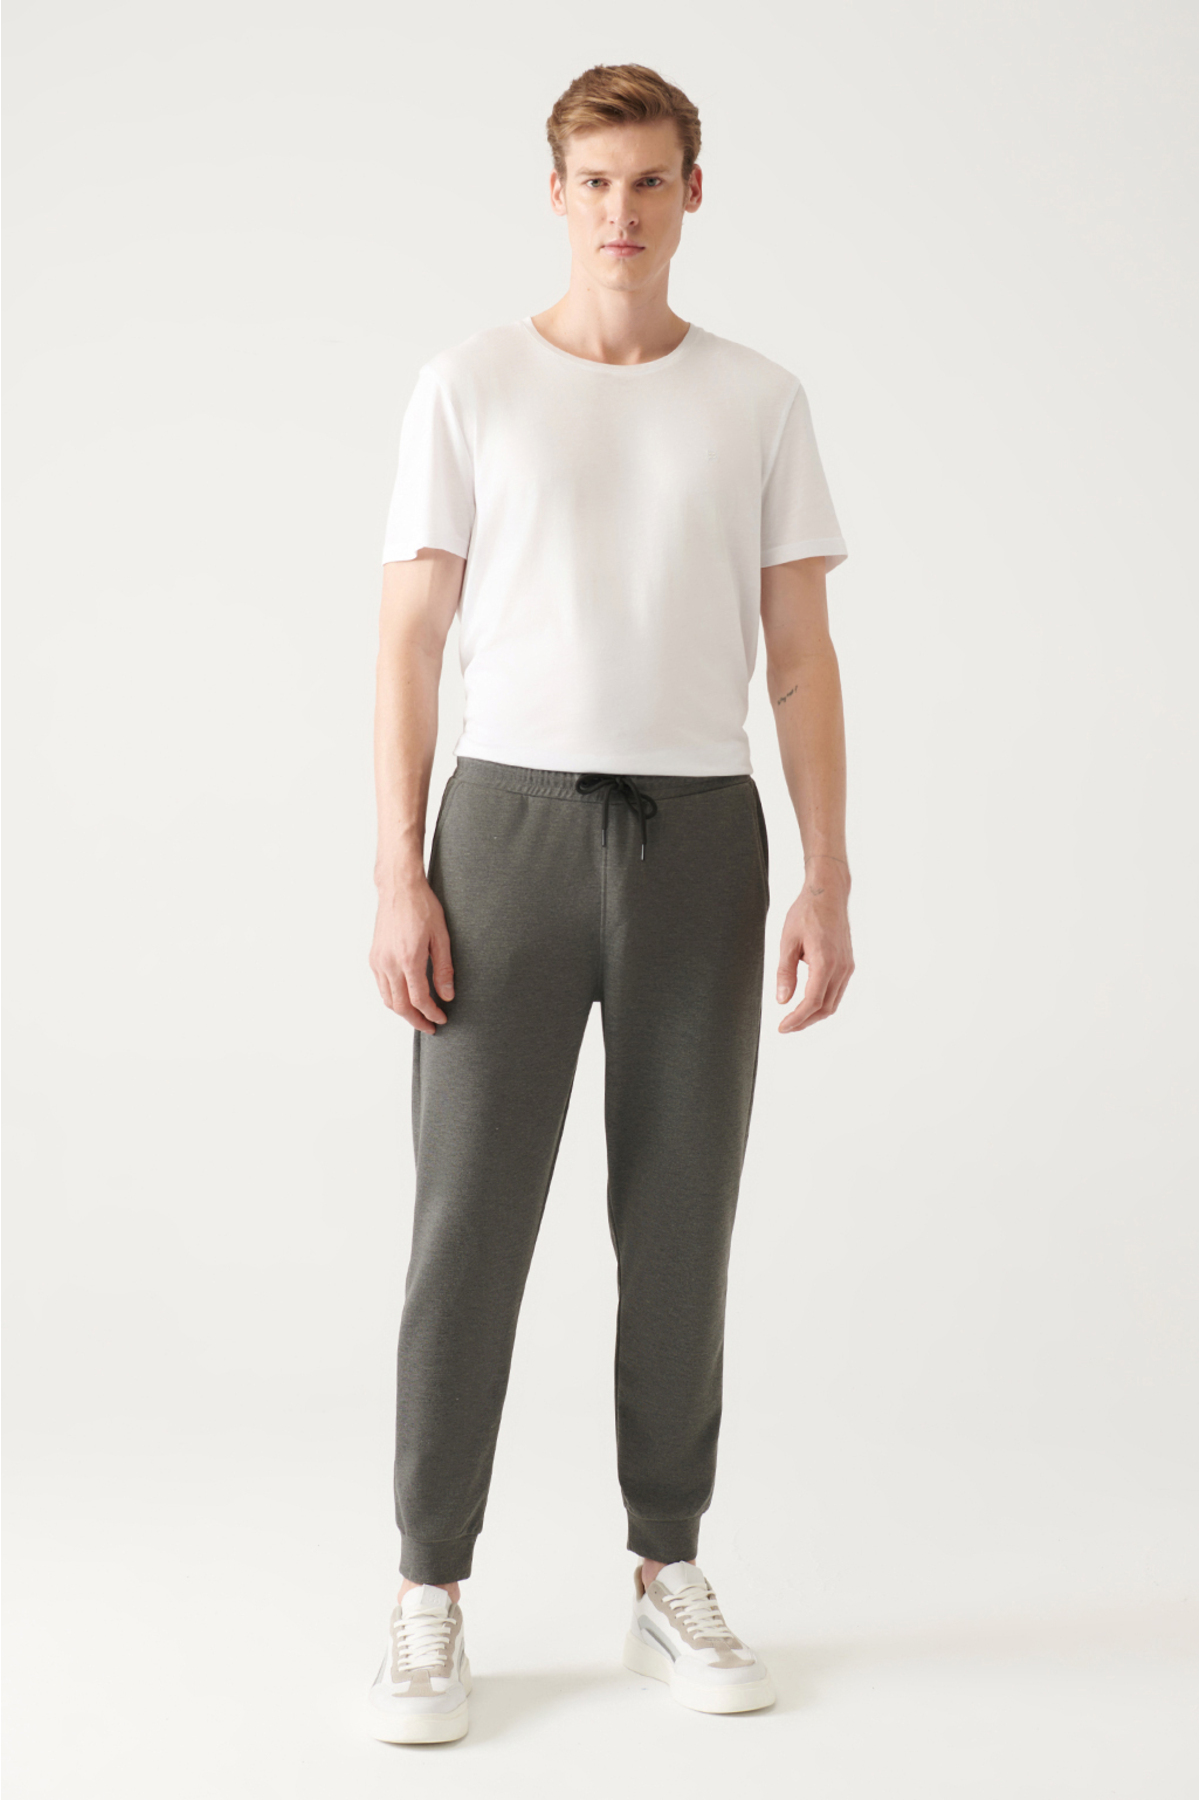 Avva Men's Gray Lace-up Waist Elastic Waist Standard Fit Regular Cut Jogger Sweatpants